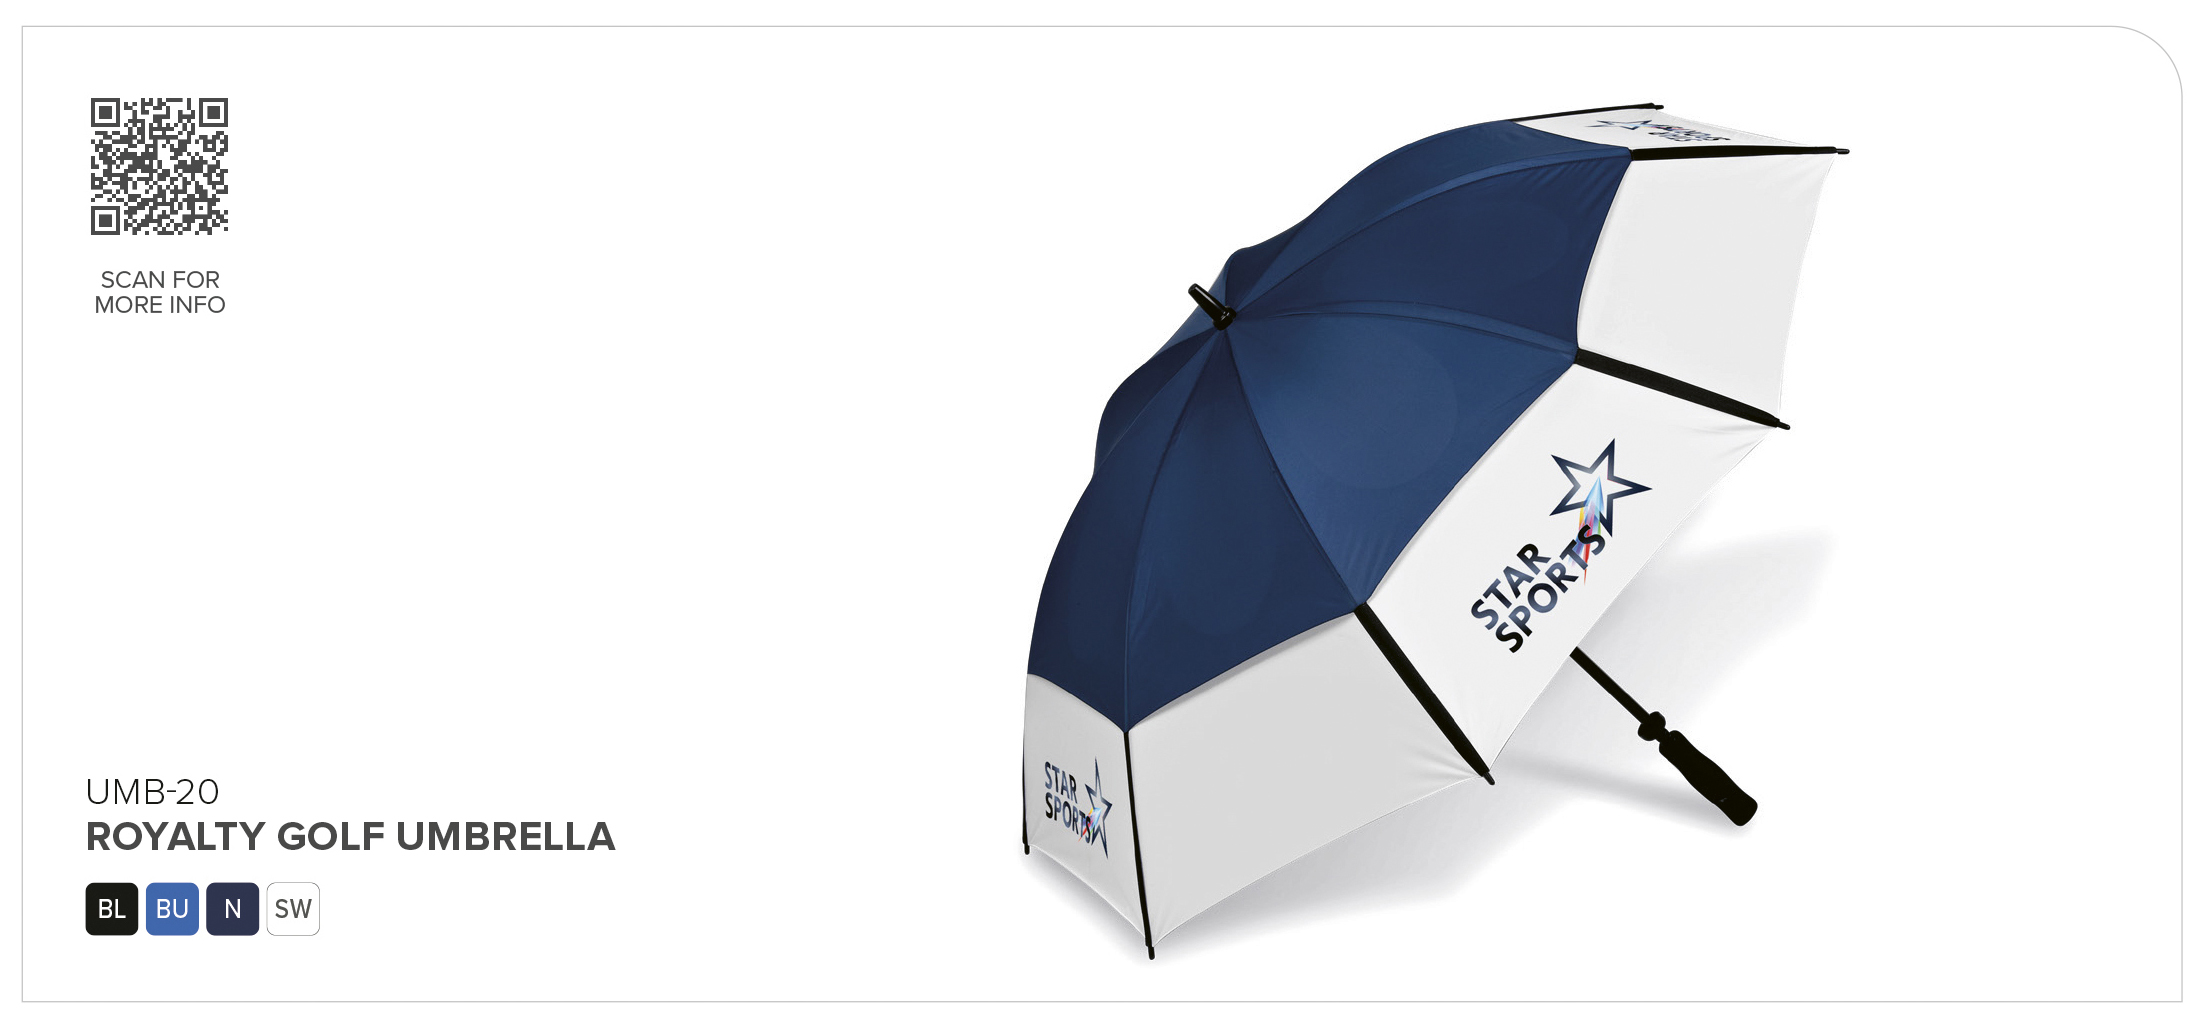 UMB-20 - Royalty Golf Umbrella - Catalogue Image